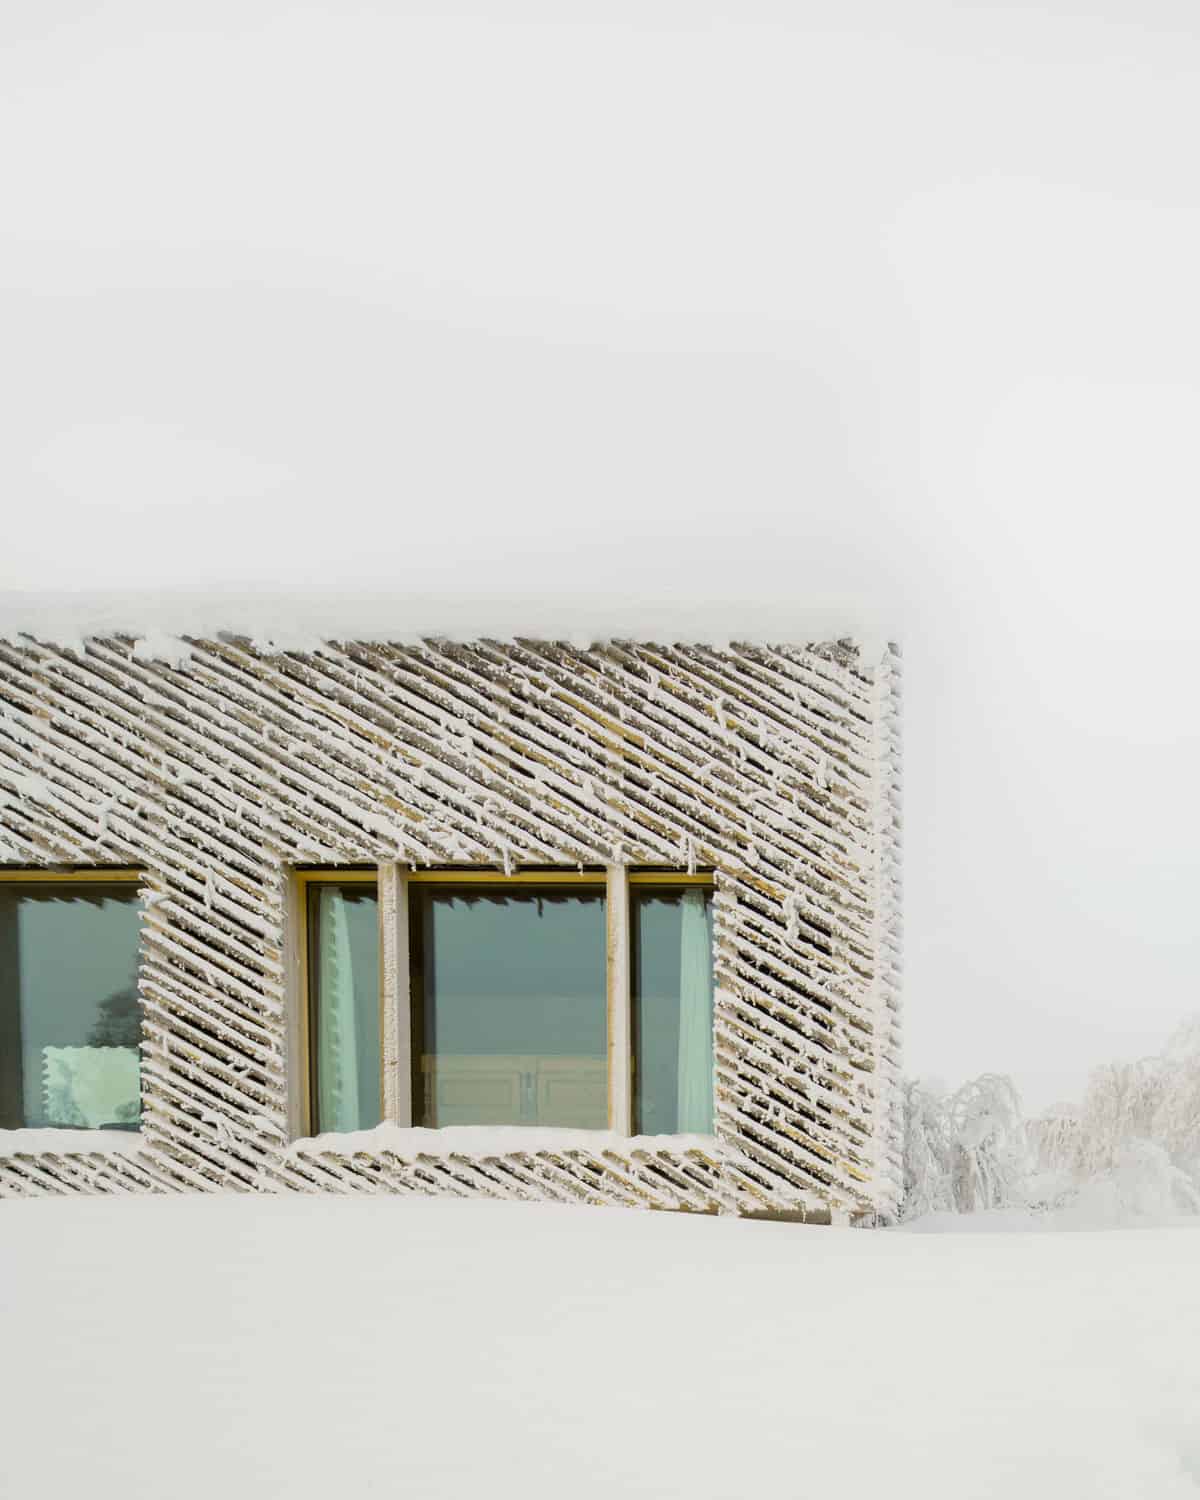 Skigard Hytte by Mork-Ulnes Architects